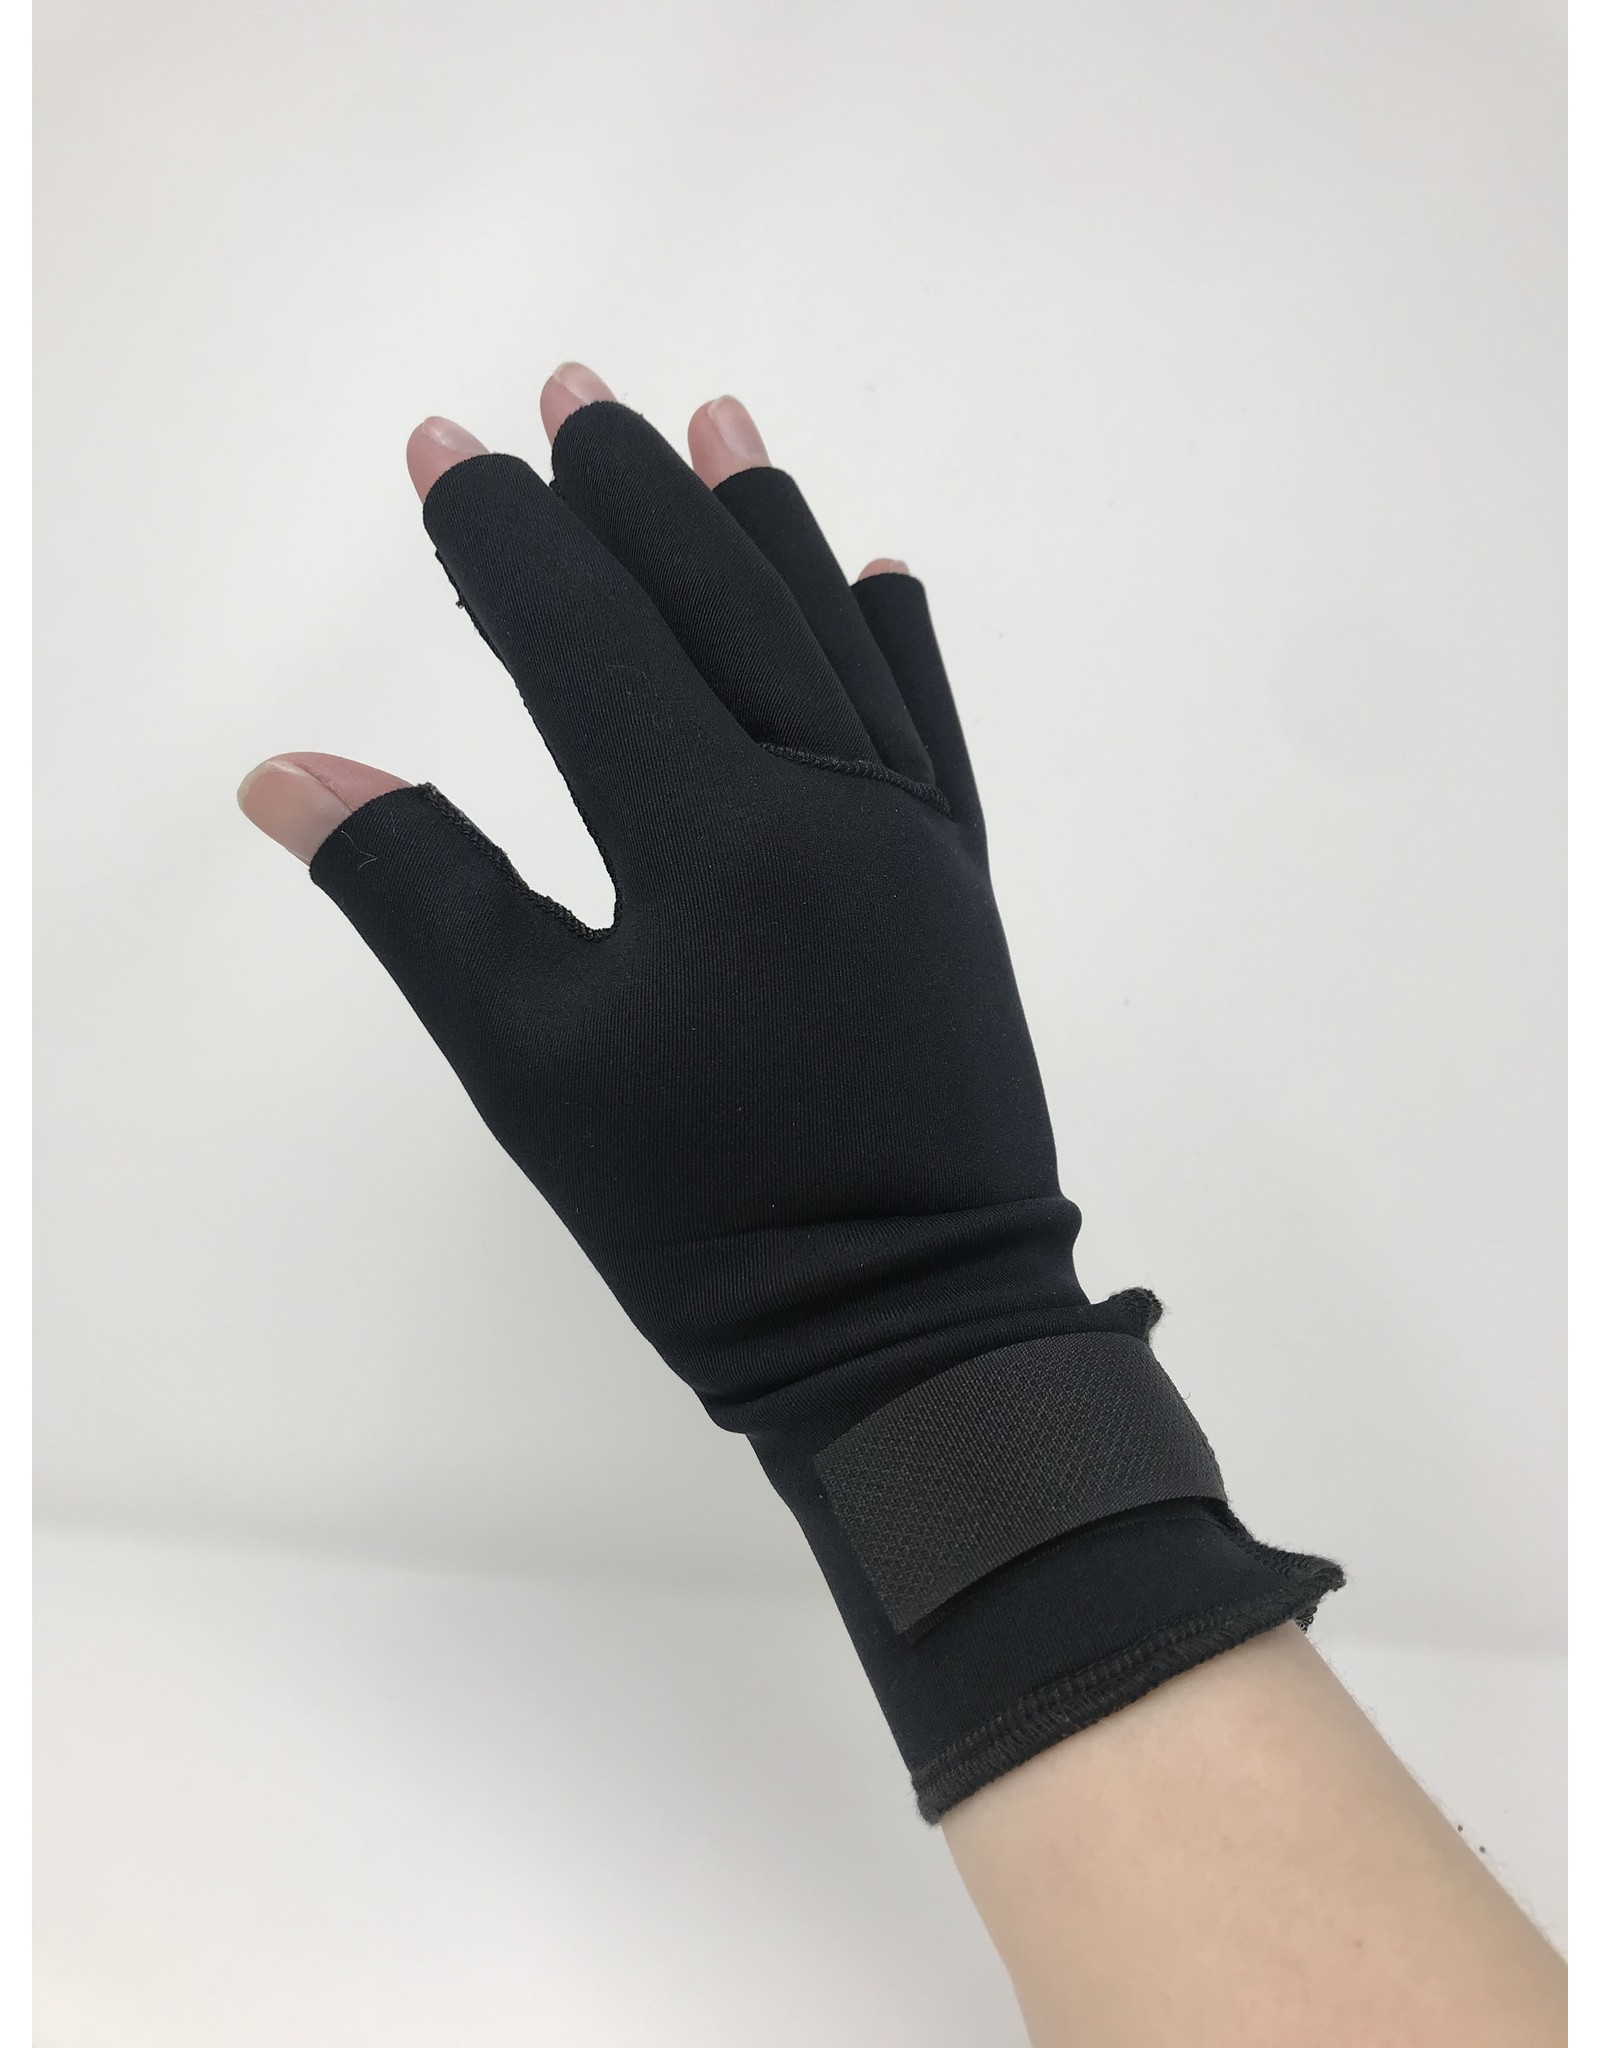 Swede-O Thermal Arthritis Gloves